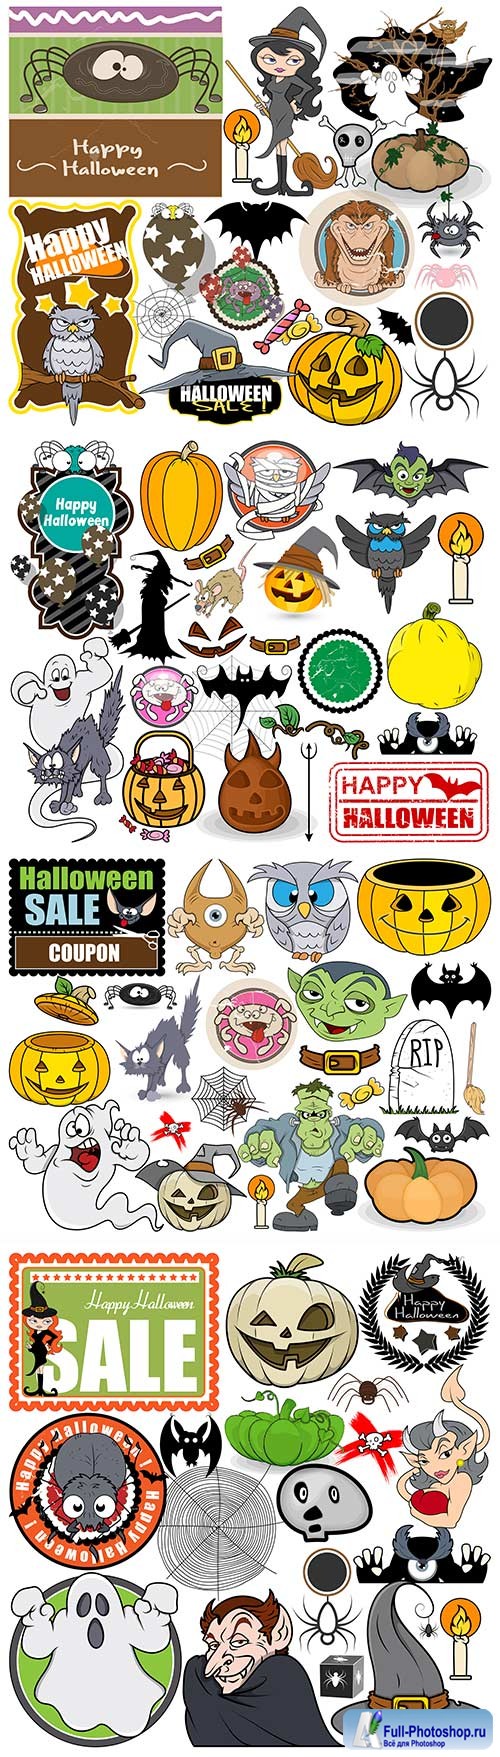 Halloween cartoon characters vector illustration # 4